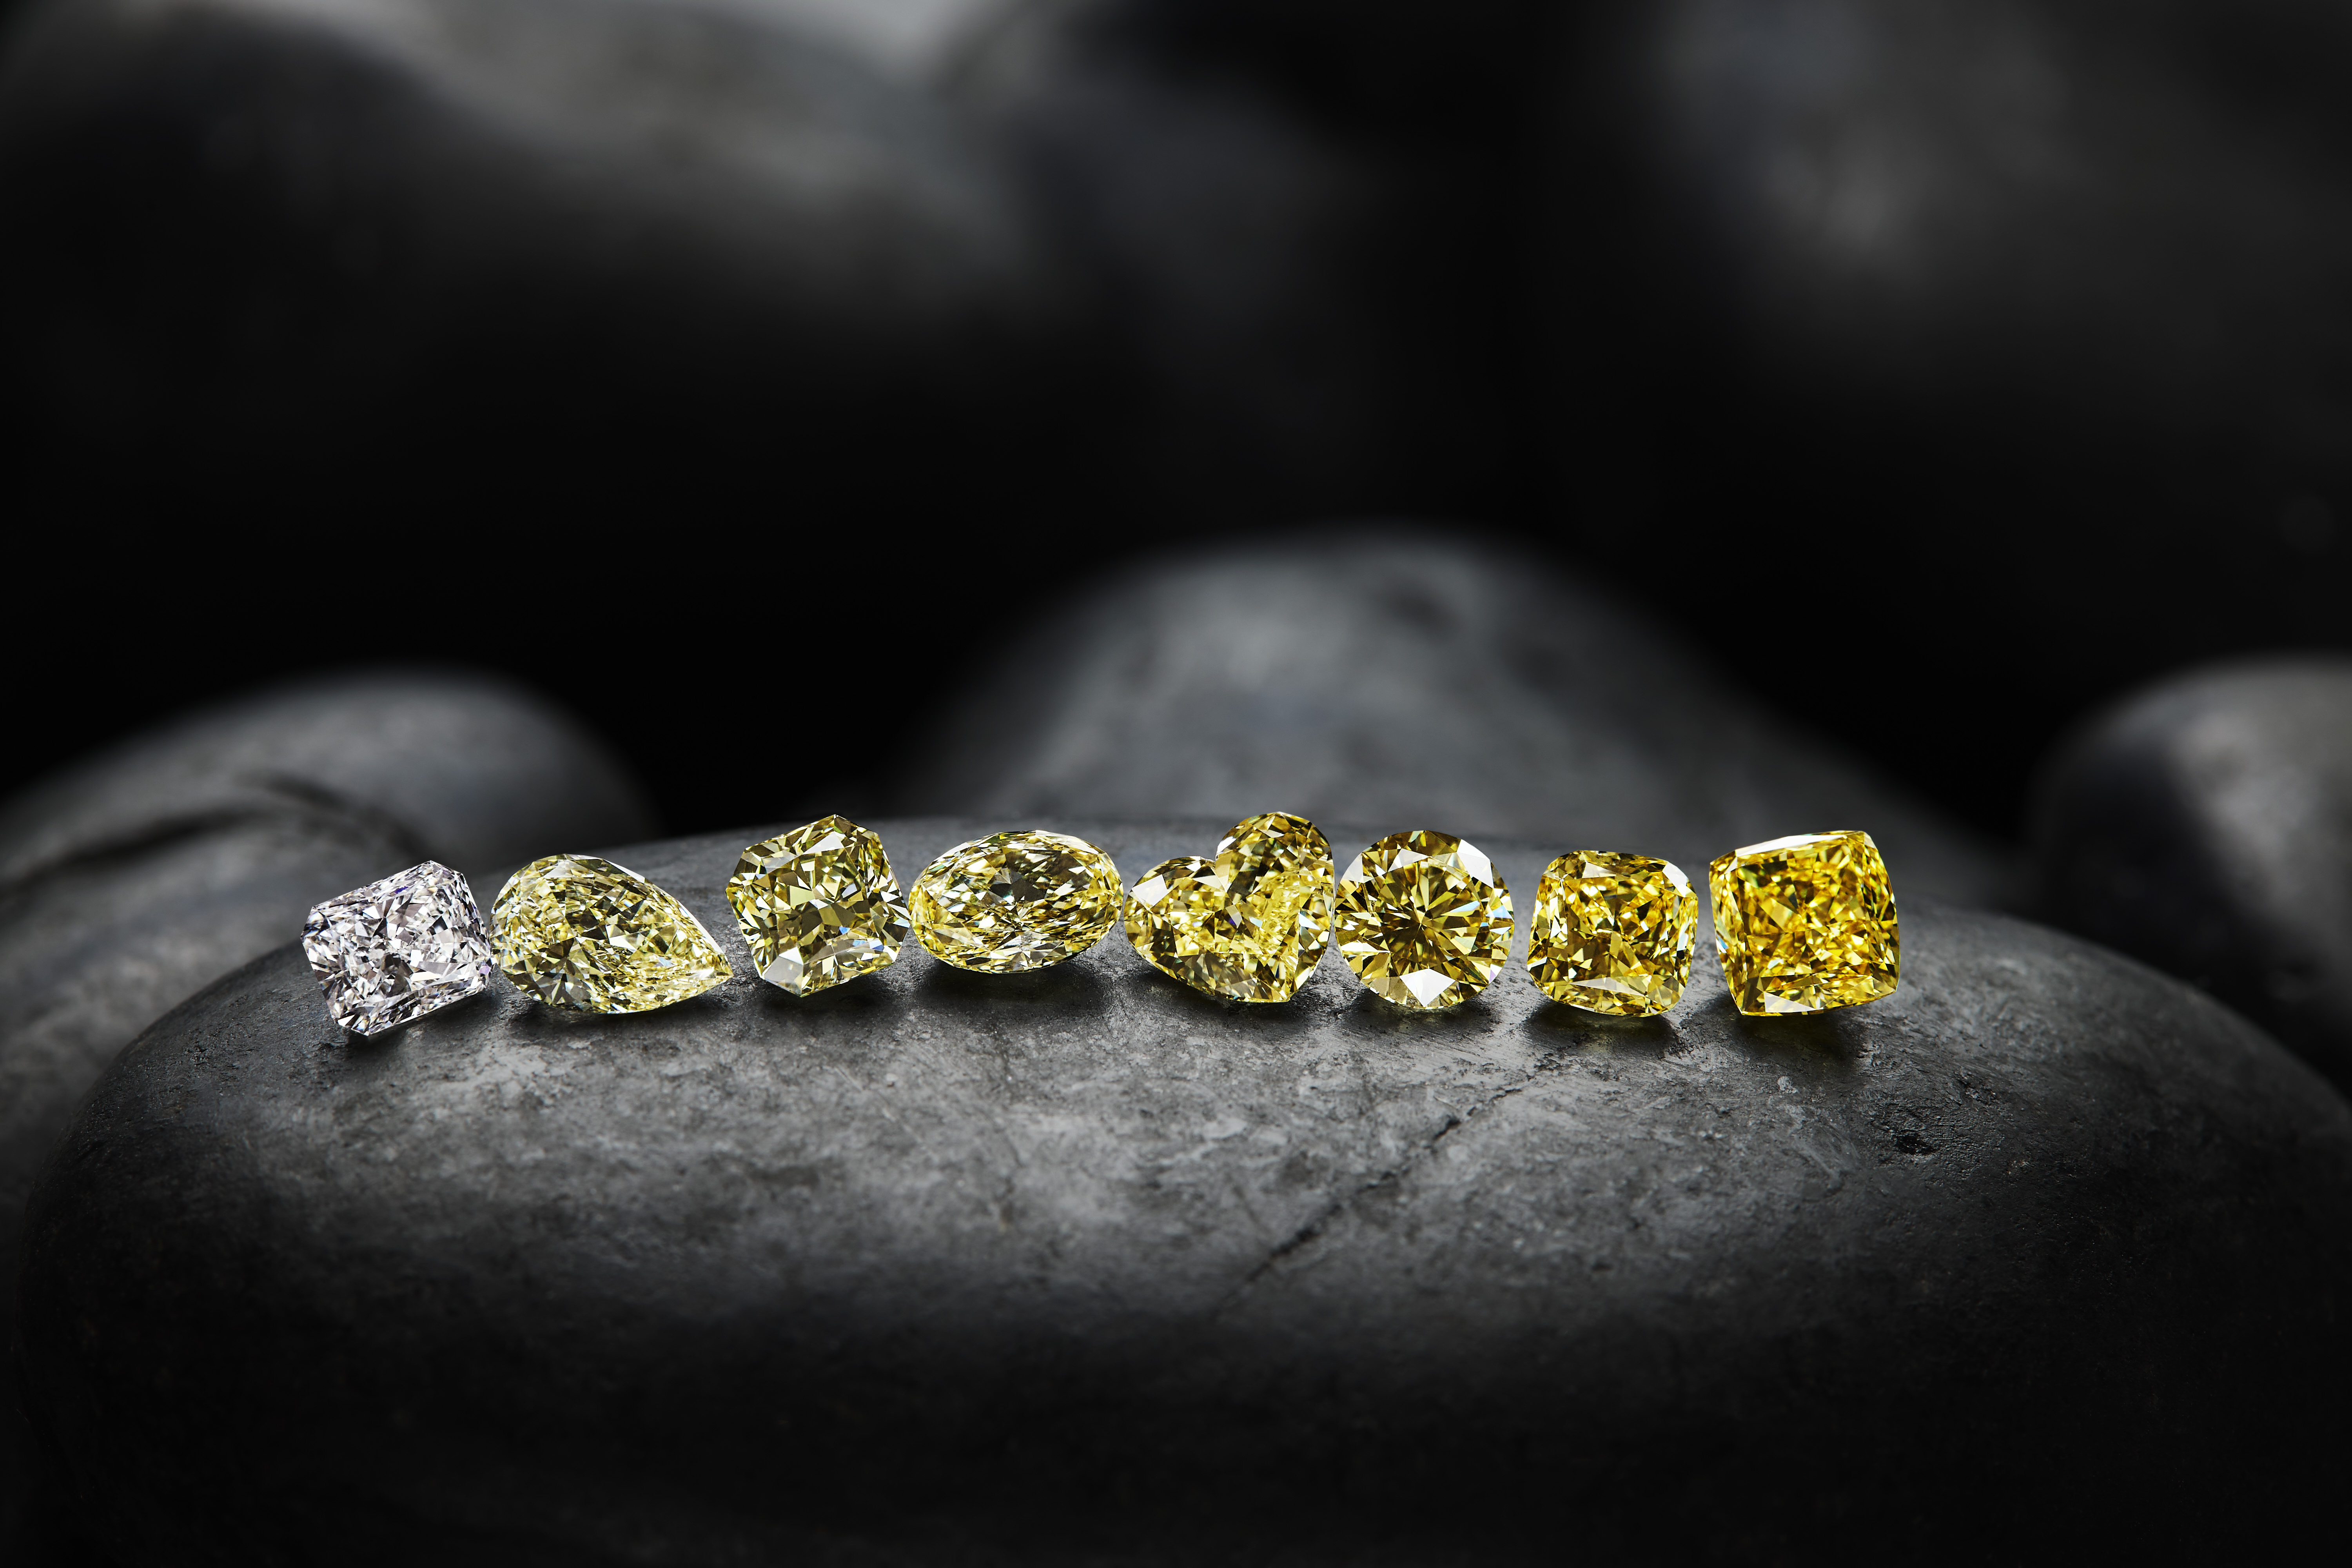 A mix of Burgundy Diamond Mines polished diamonds lined up on a dark background.